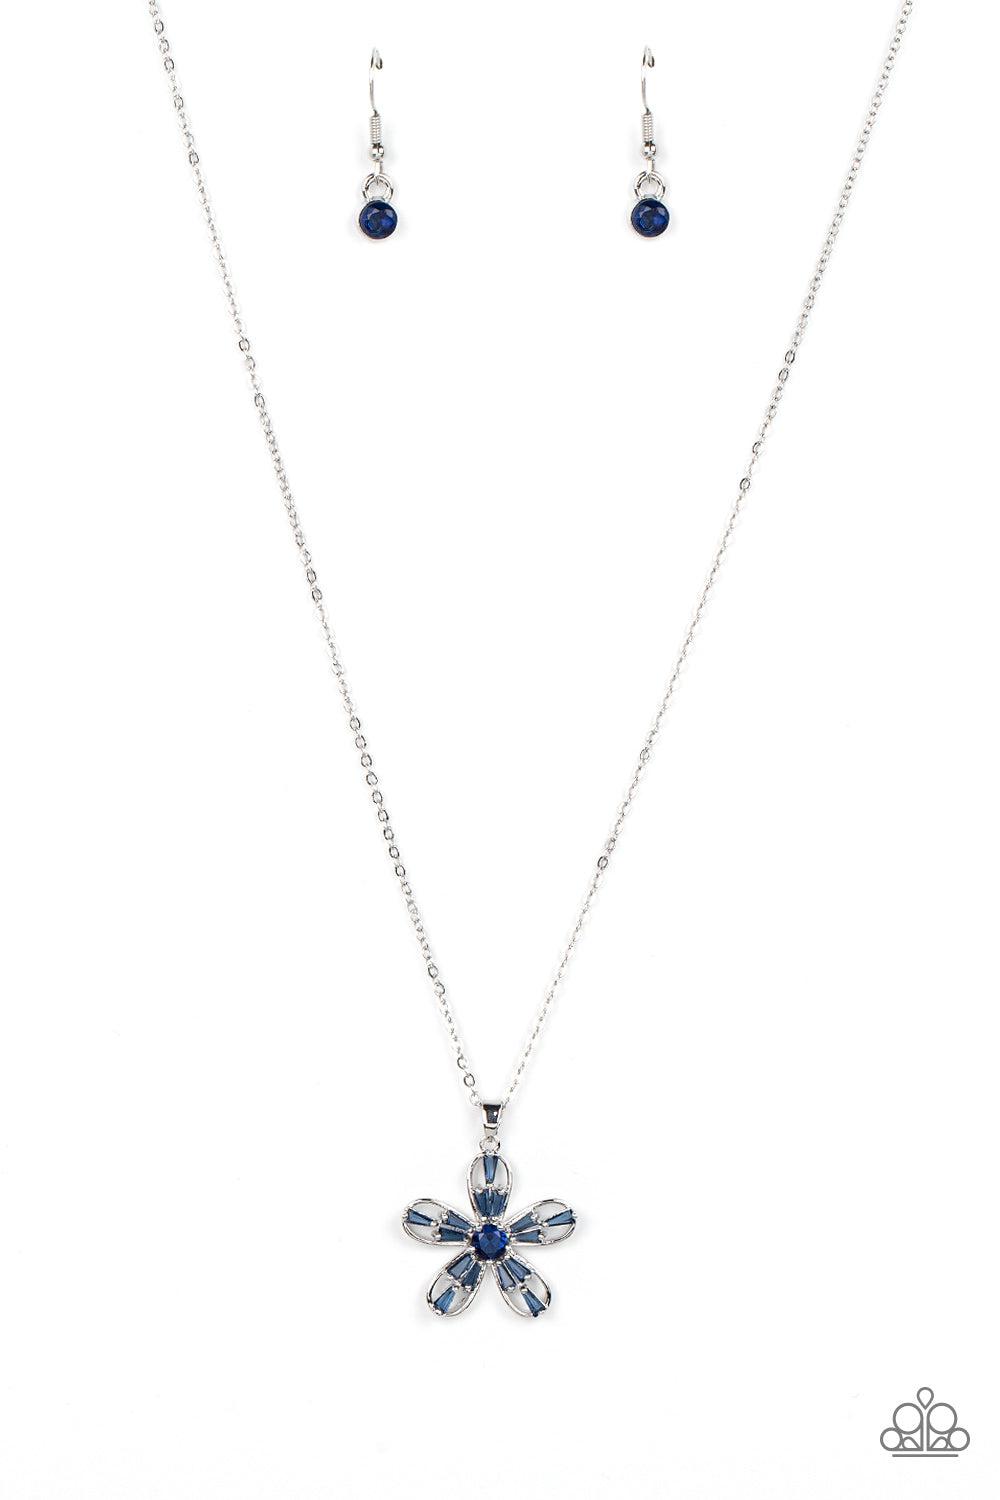 Botanical Ballad Blue Rhinestone Flower Necklace - Paparazzi Accessories- lightbox - CarasShop.com - $5 Jewelry by Cara Jewels